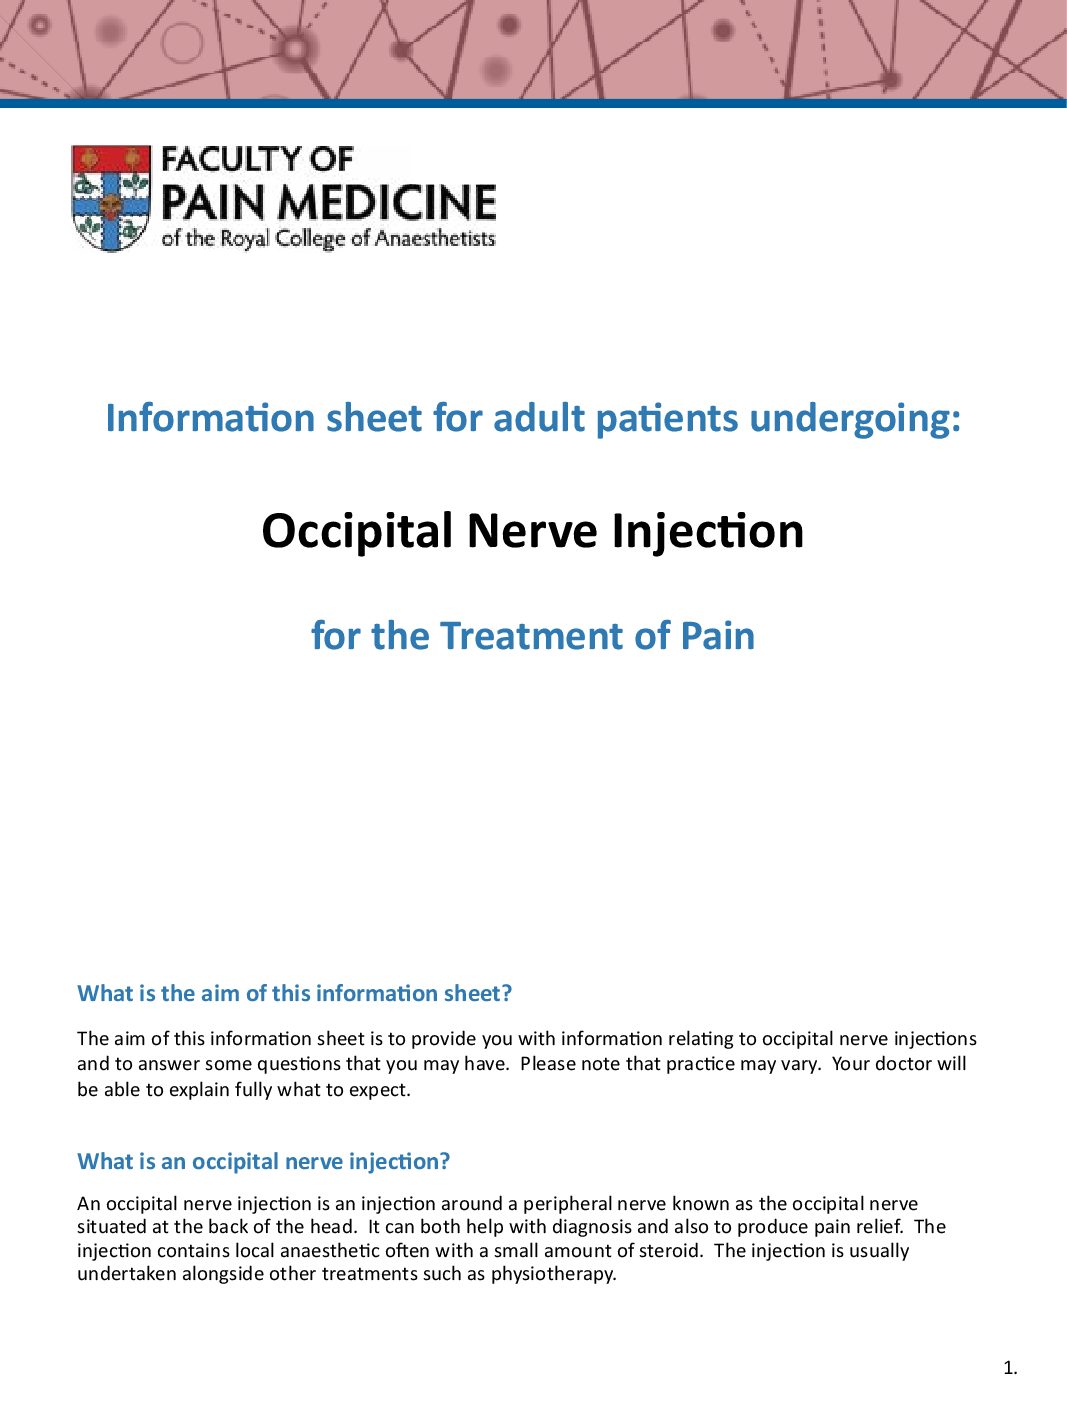 Occipital Nerve Injection 5683